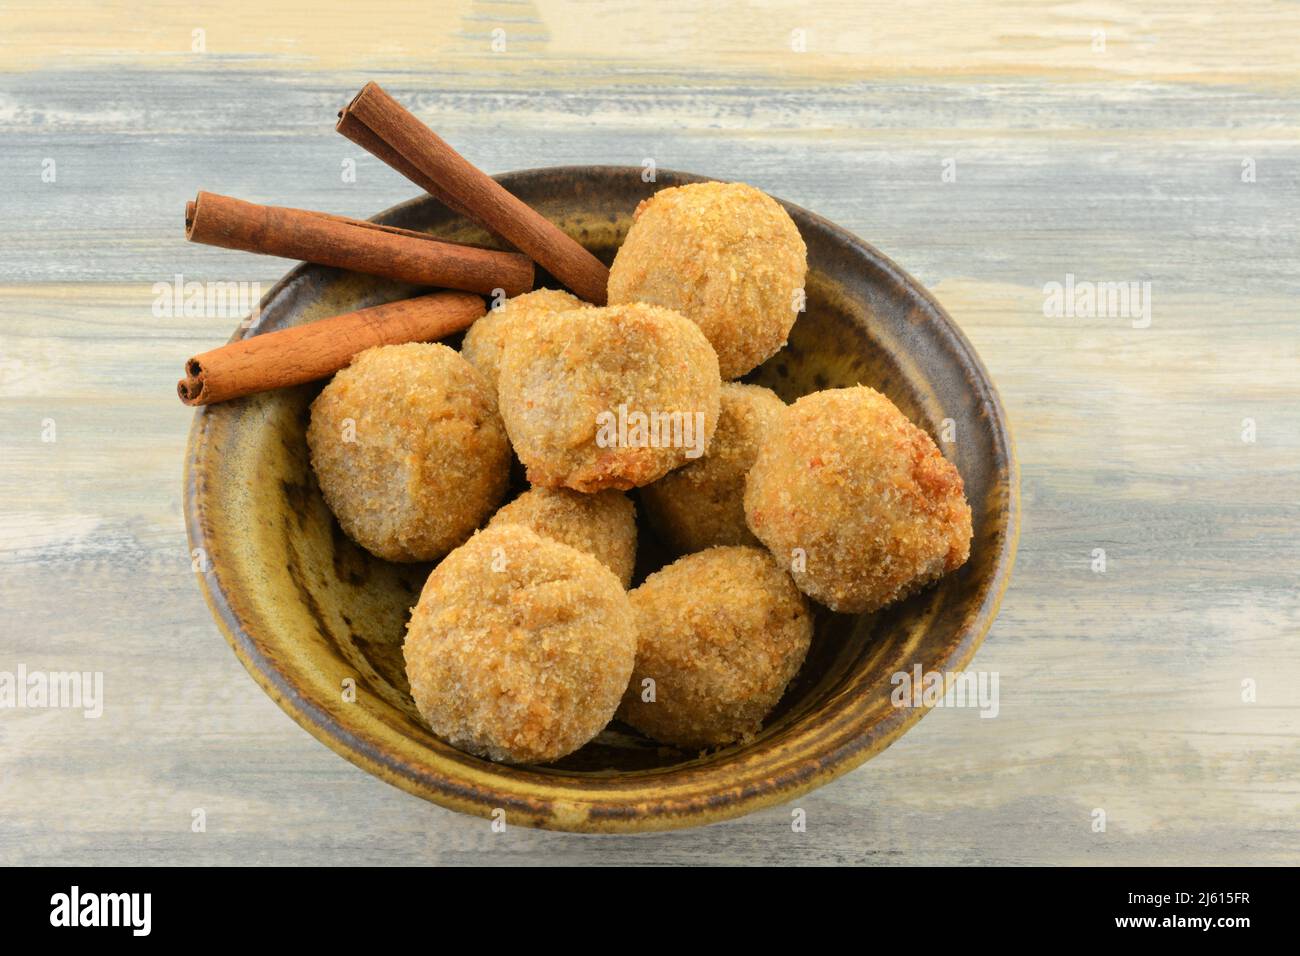 Apple cinnamon oatmeal balls with cinnamon sticks in bowl on table Stock Photo